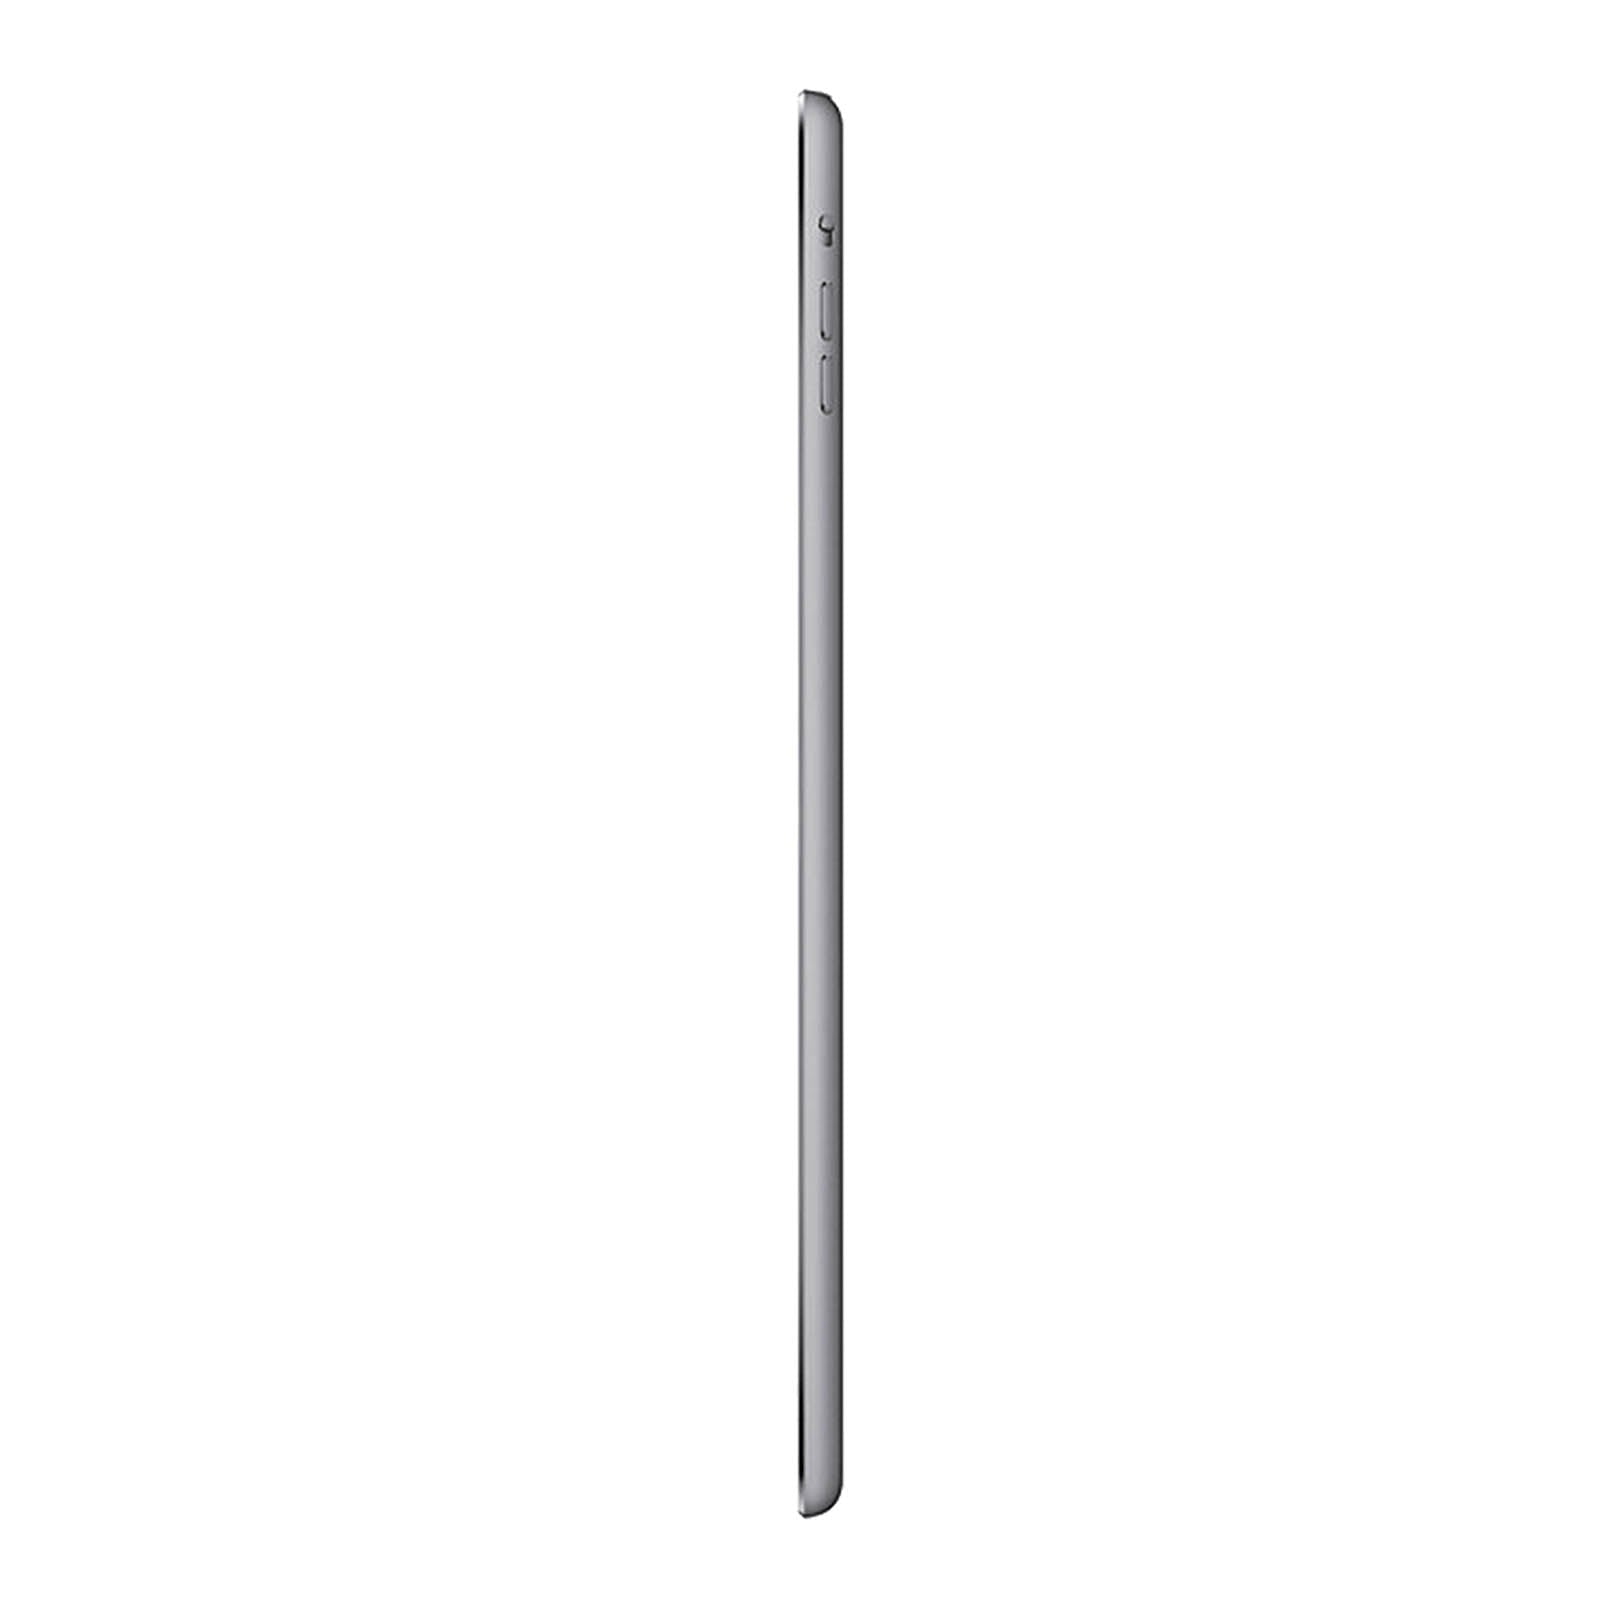 iPad Air 32GB WiFi Space Grey Fair-Unlocked